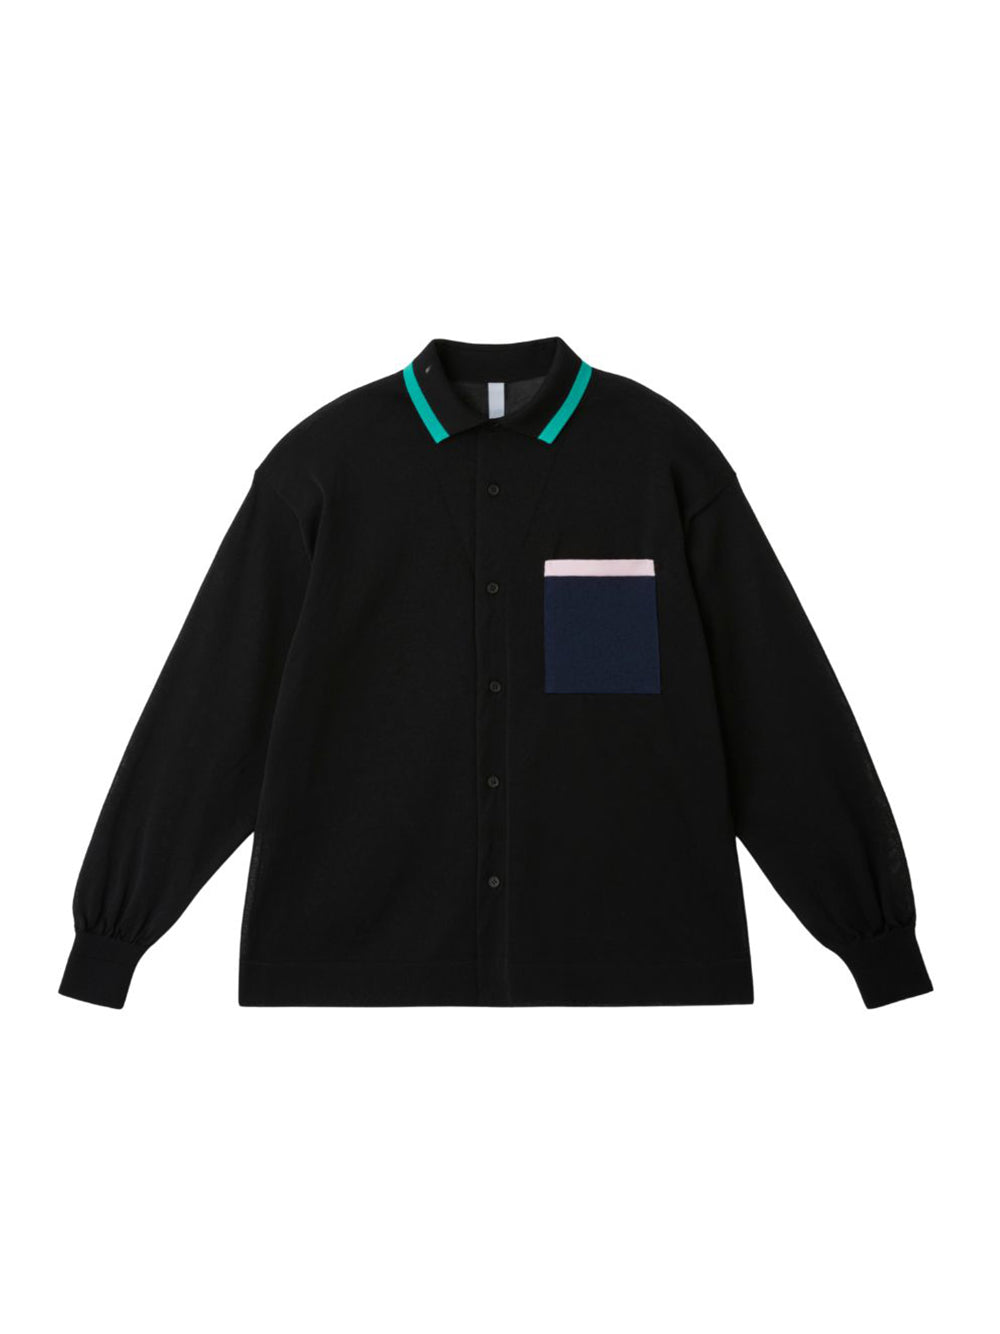 Tc High Gauge Long Sleeve Shirt (Black Multi)